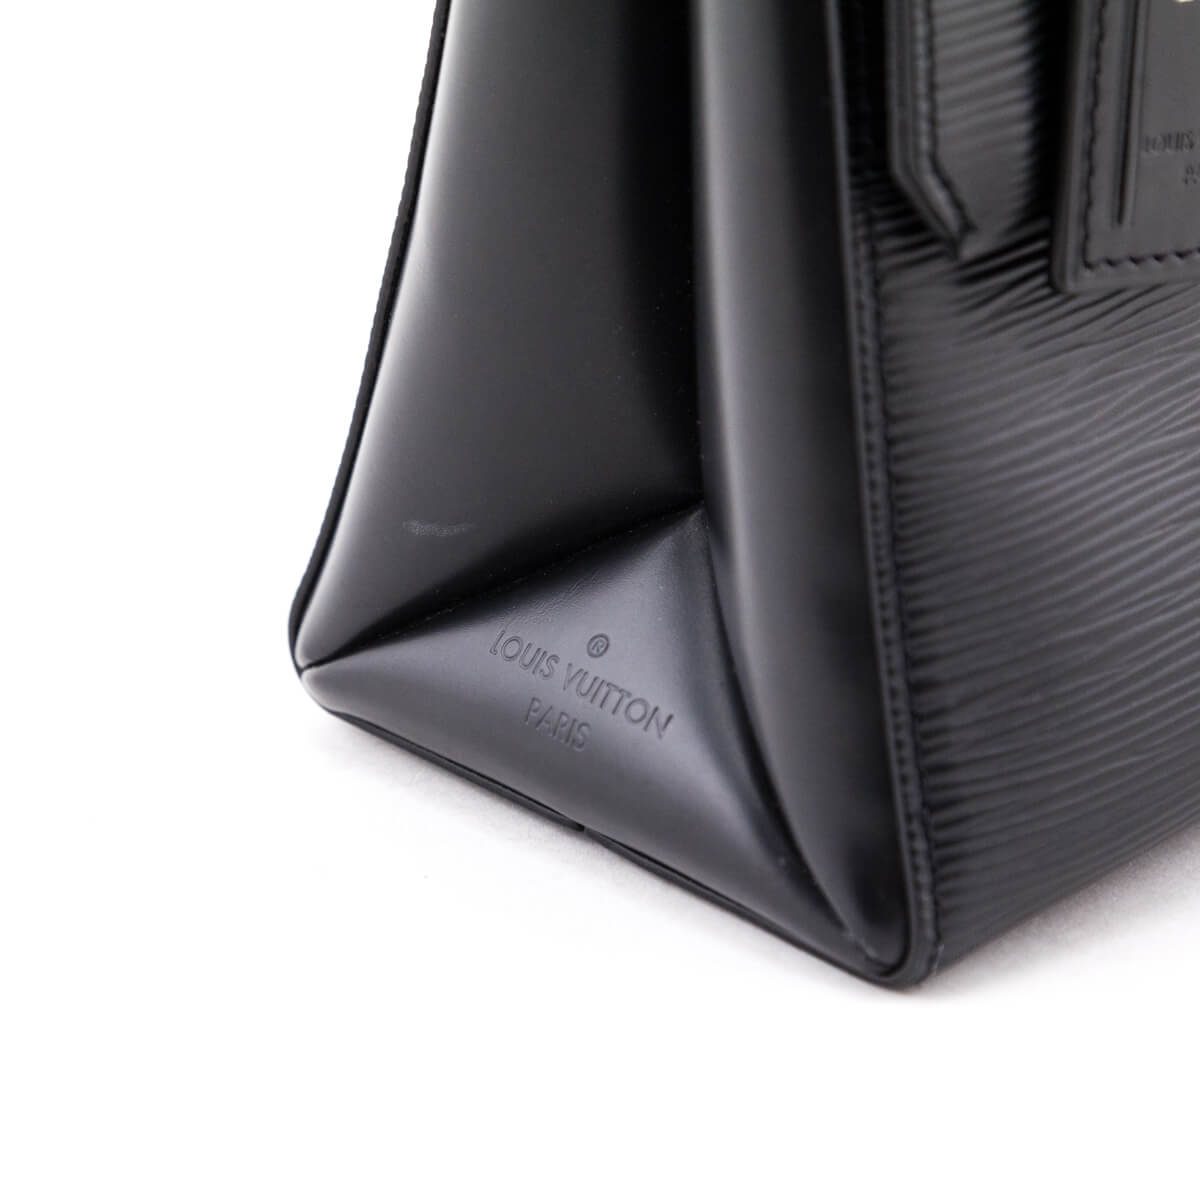 Louis Vuitton Black Epi Grenelle PM - Preloved Louis Vuitton Handbags